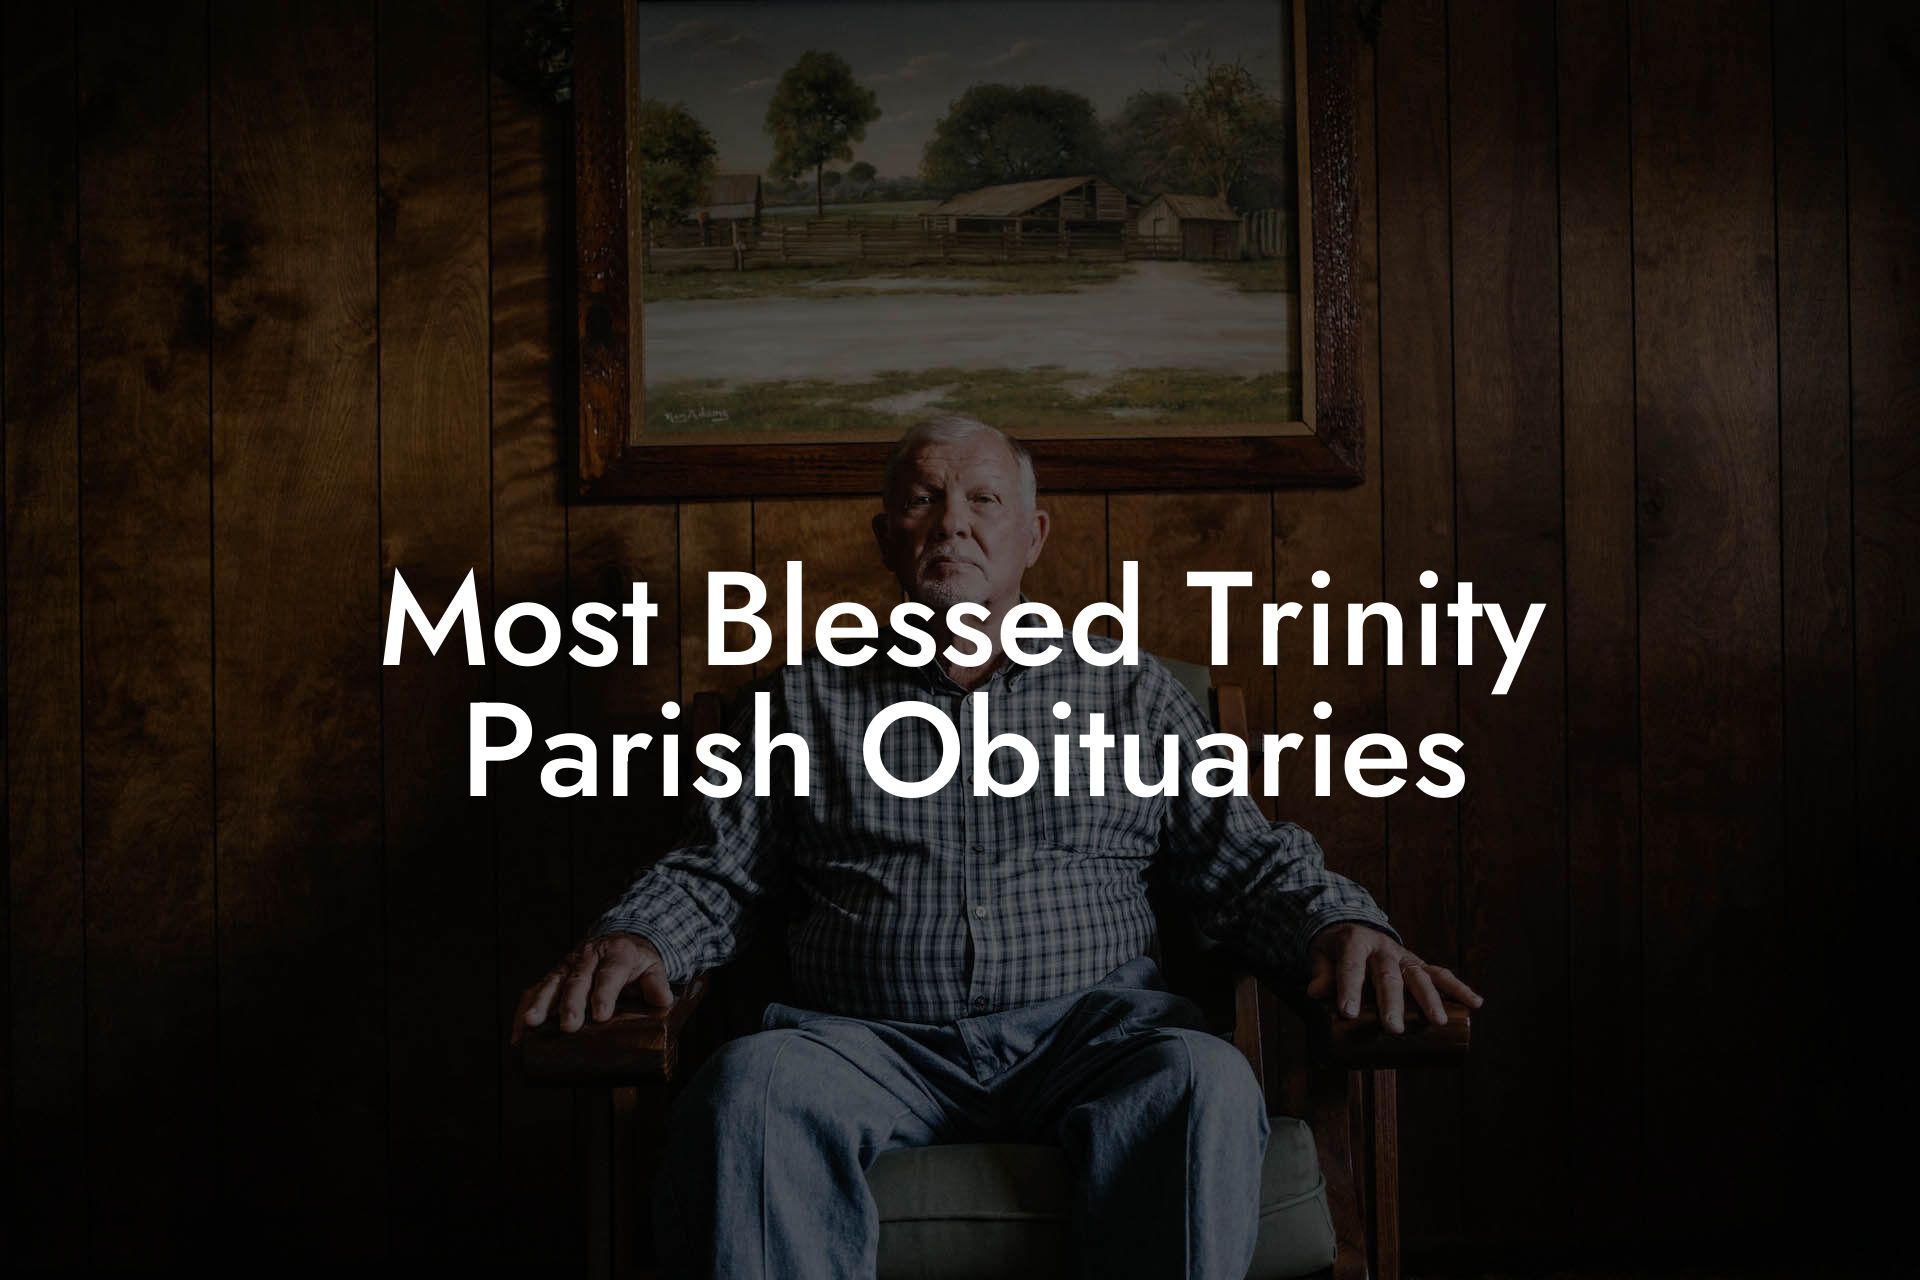 Most Blessed Trinity Parish Obituaries